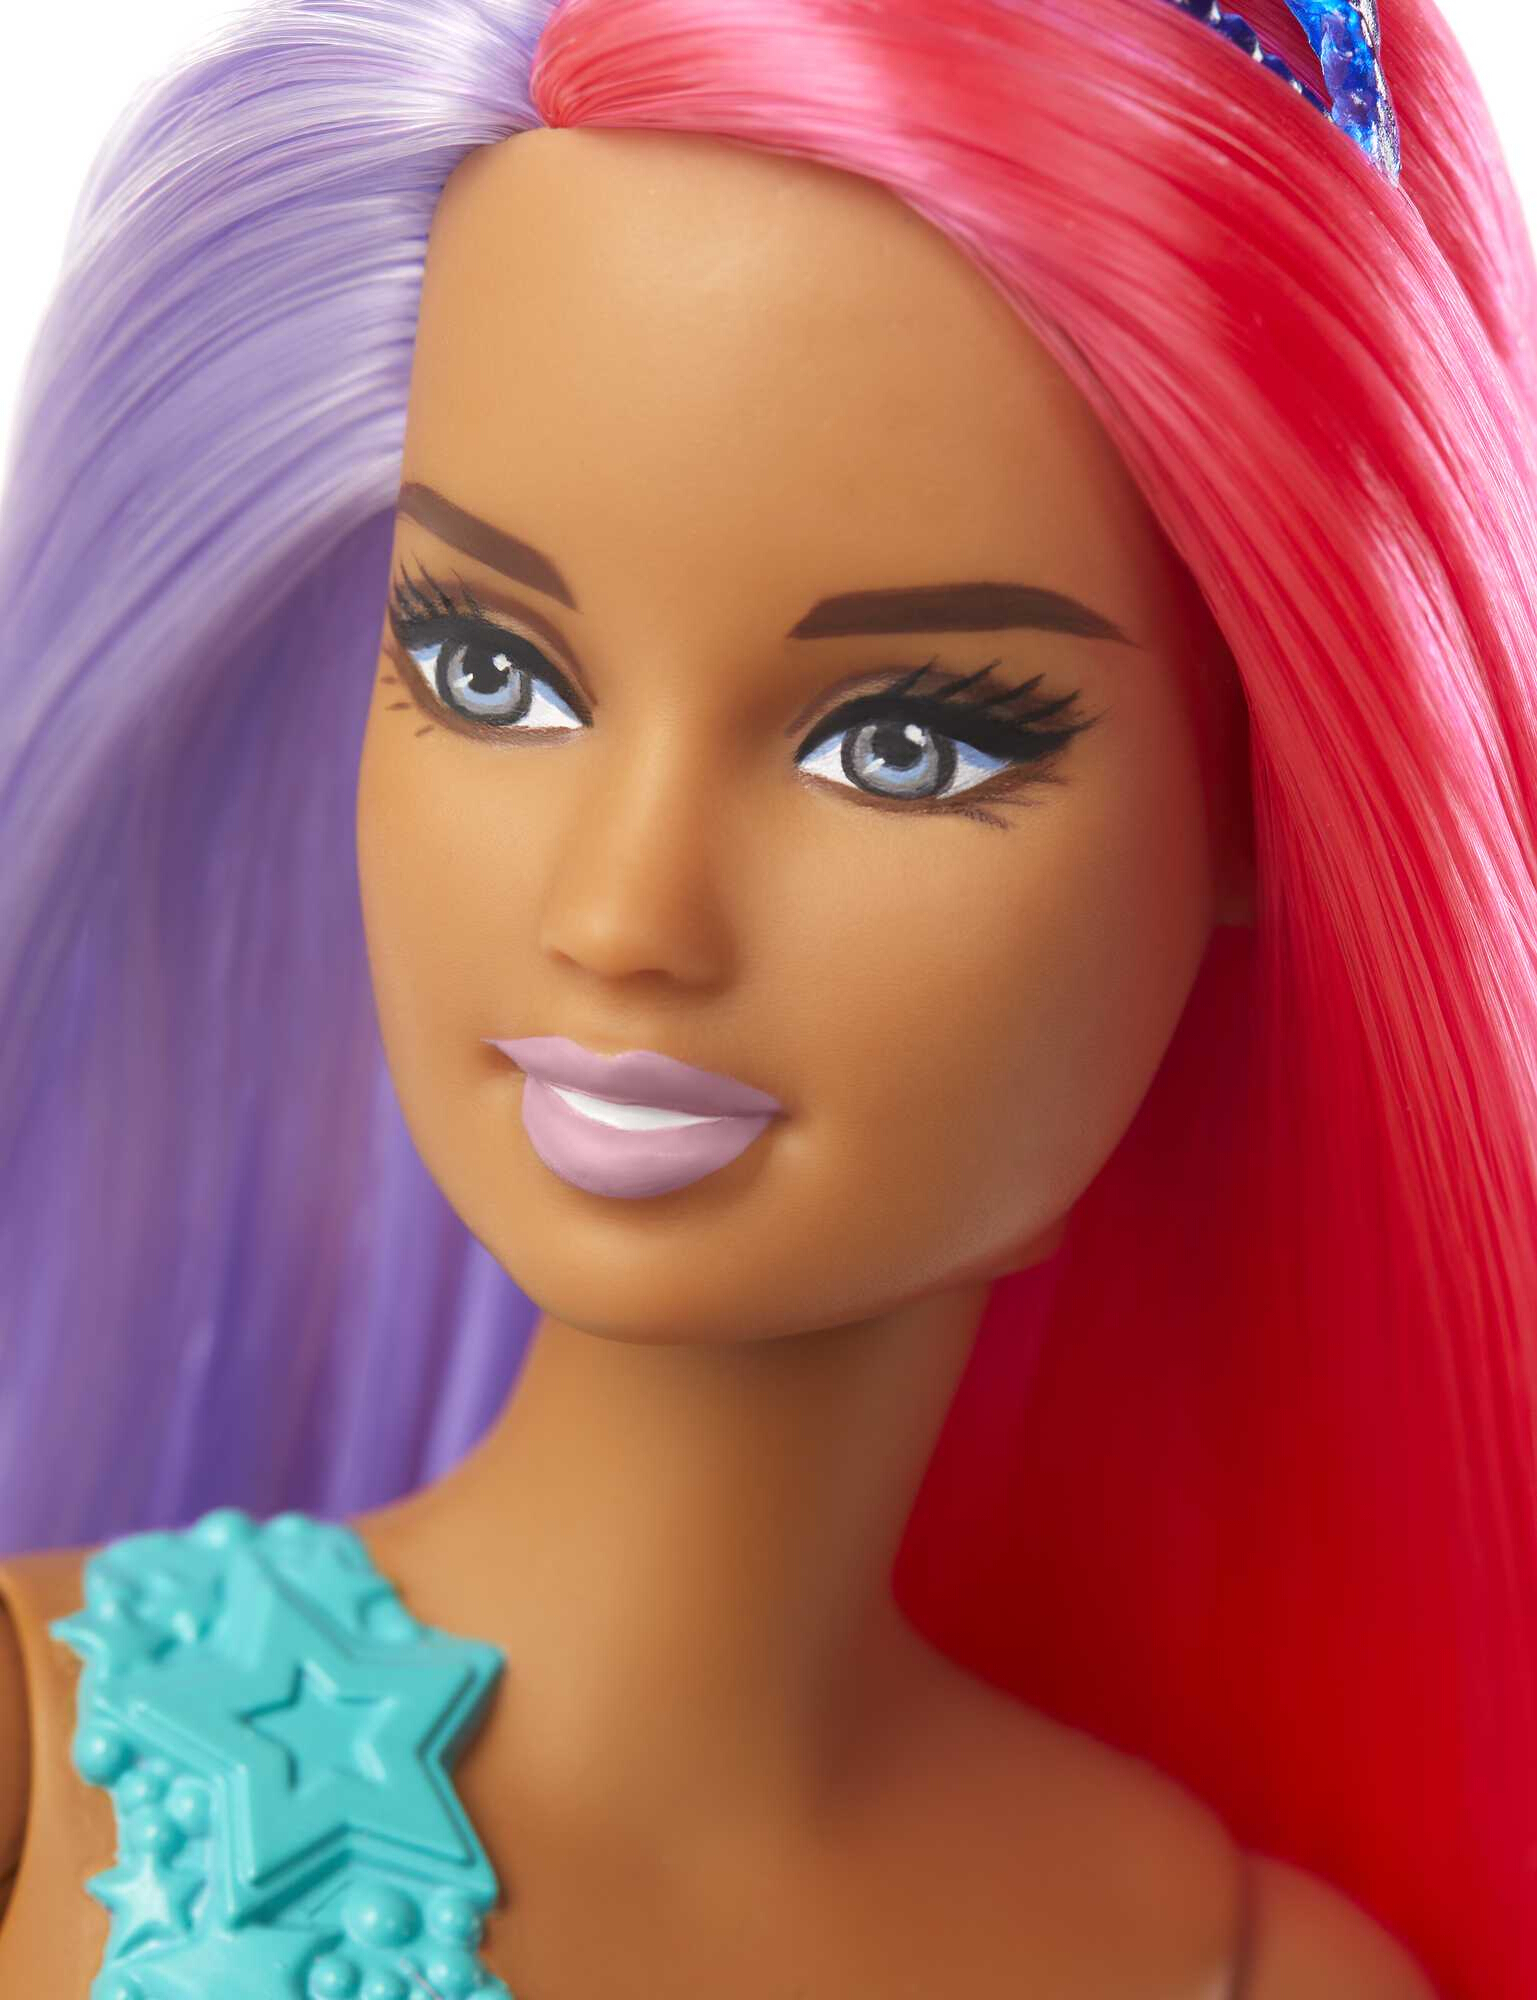 Barbie Dreamtopia Mermaid Doll, 12-inch, Pink and Purple Hair - image 3 of 6